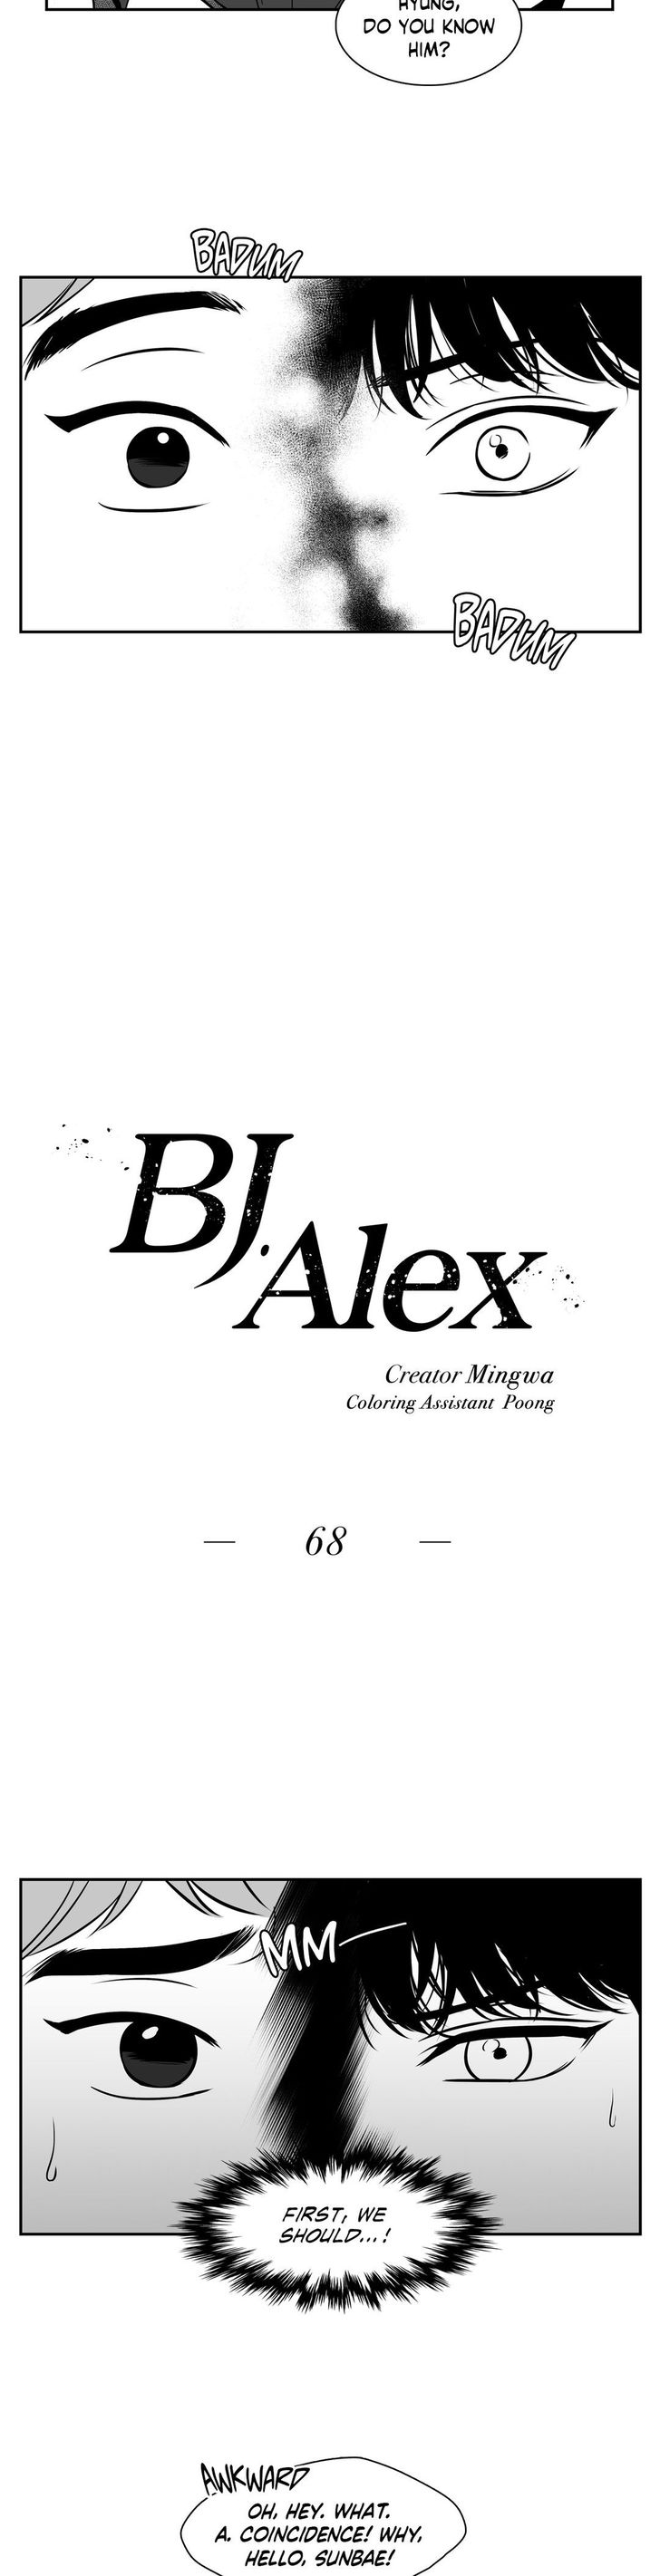 Bj Alex, Chapter 68 - Ch.068 image 02